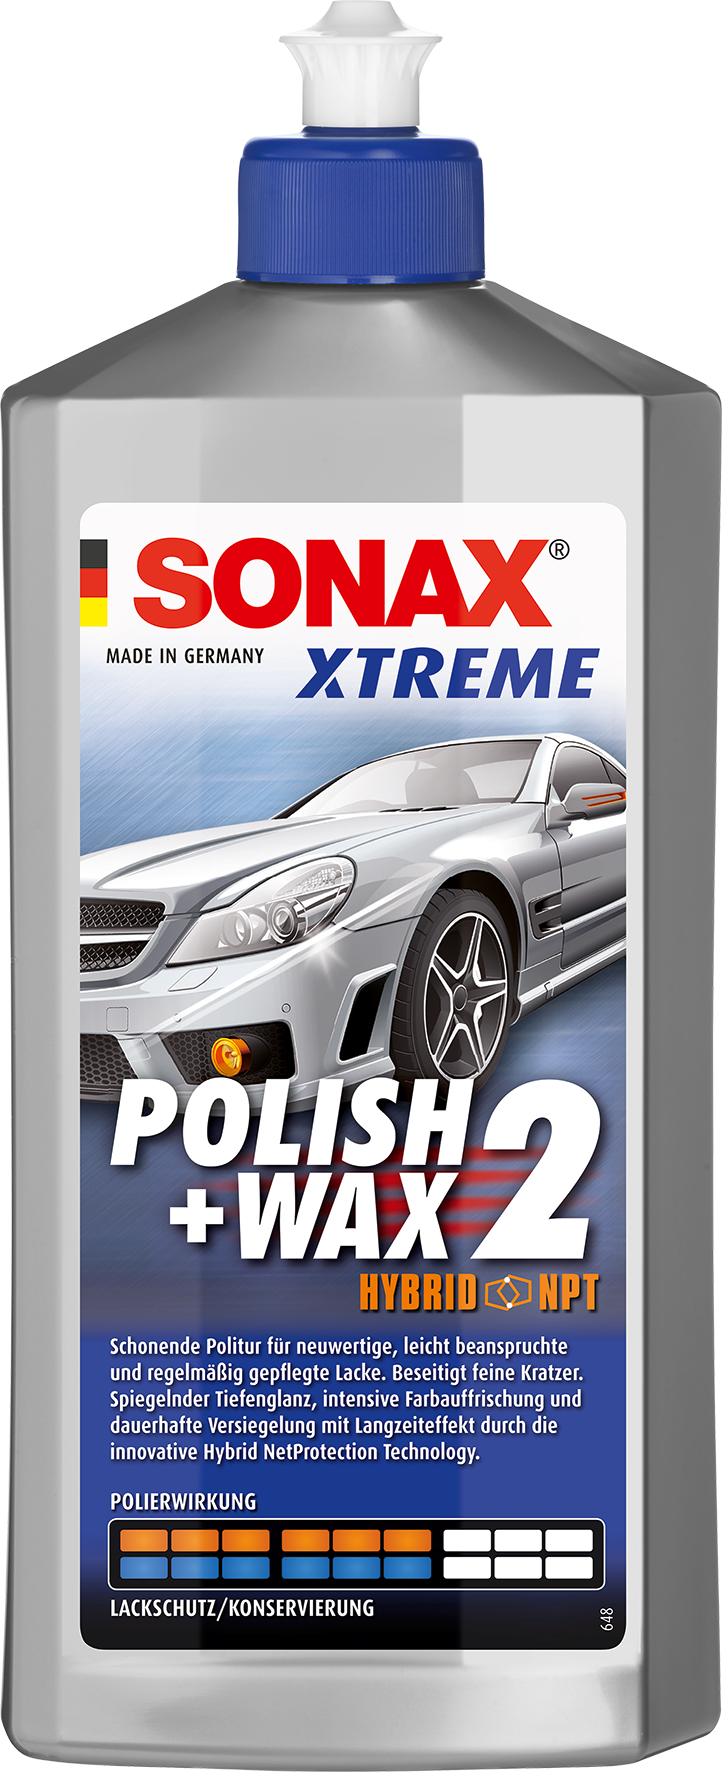 Sonax 02072000 Xtreme Polish+Wax 2 Hybrid 500ml